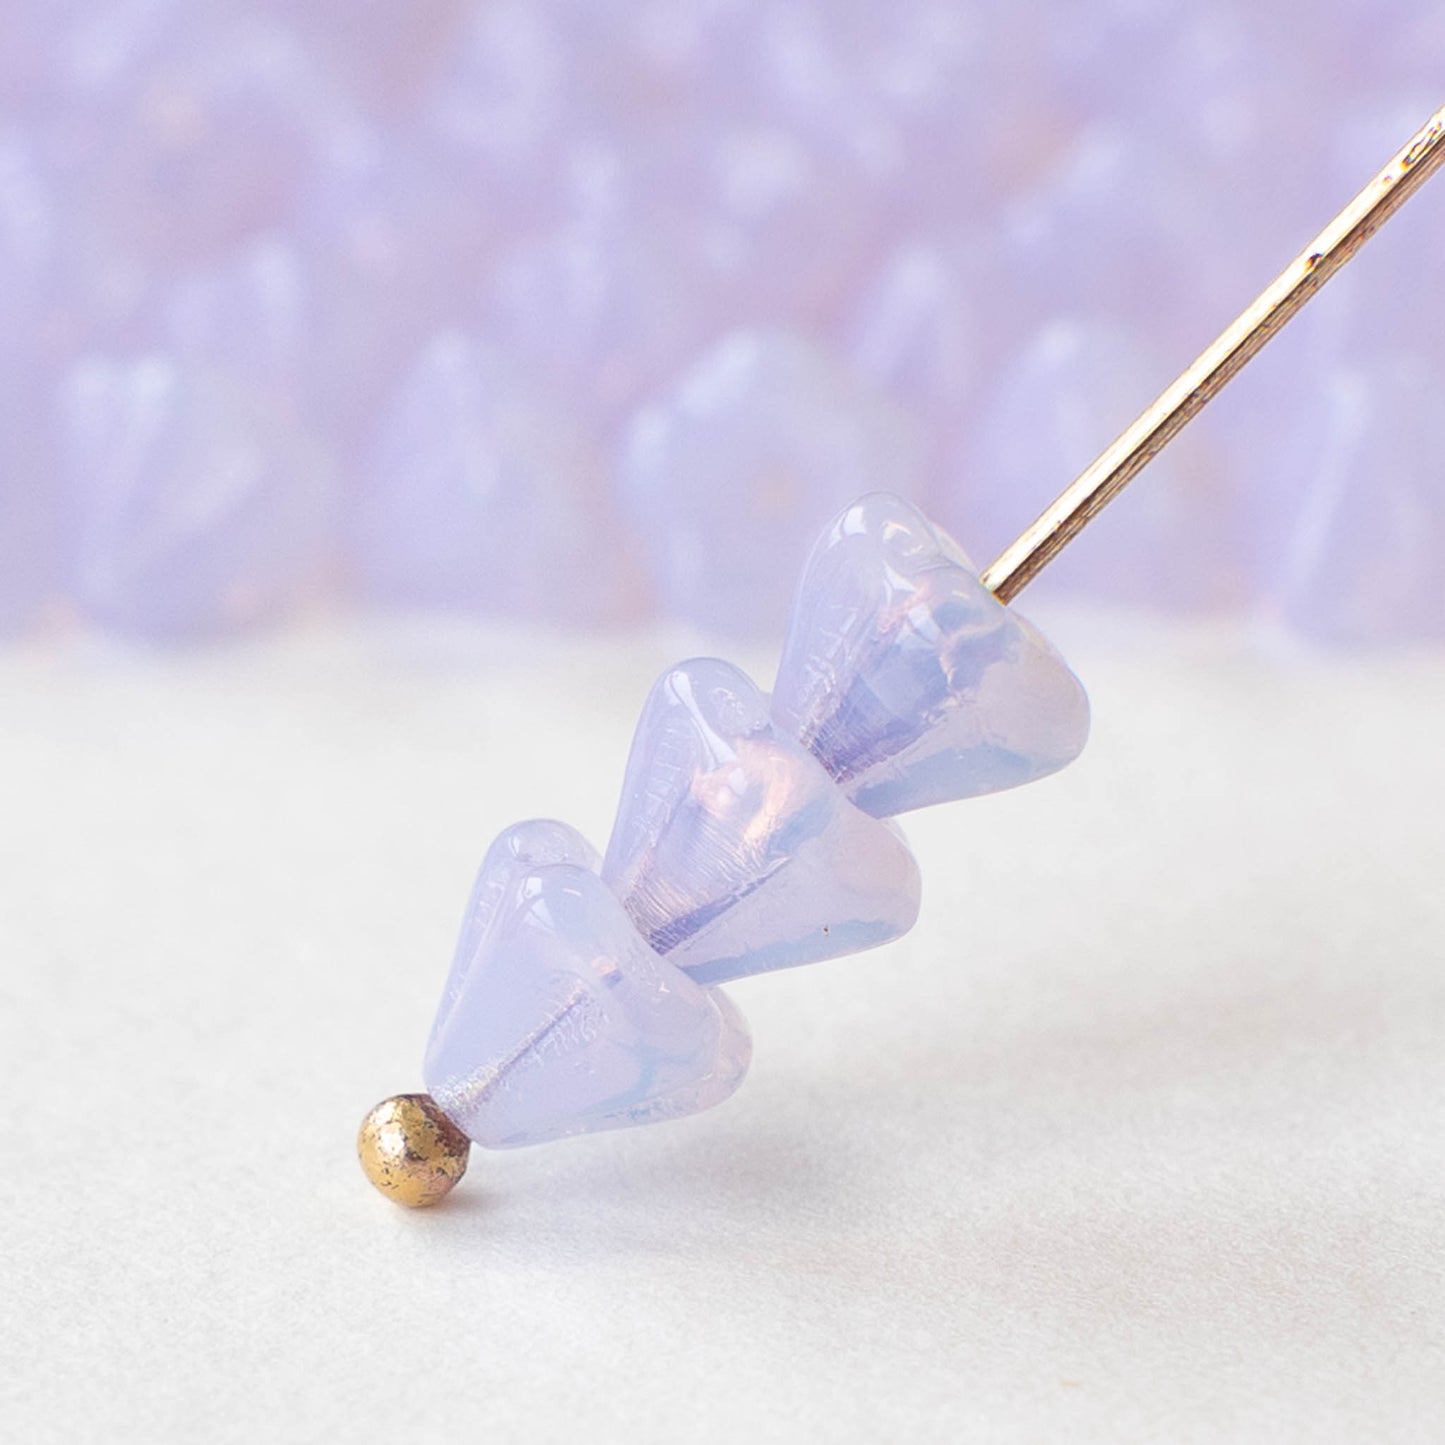 4x6mm Glass Flower Beads - Lavender Opaline - 50